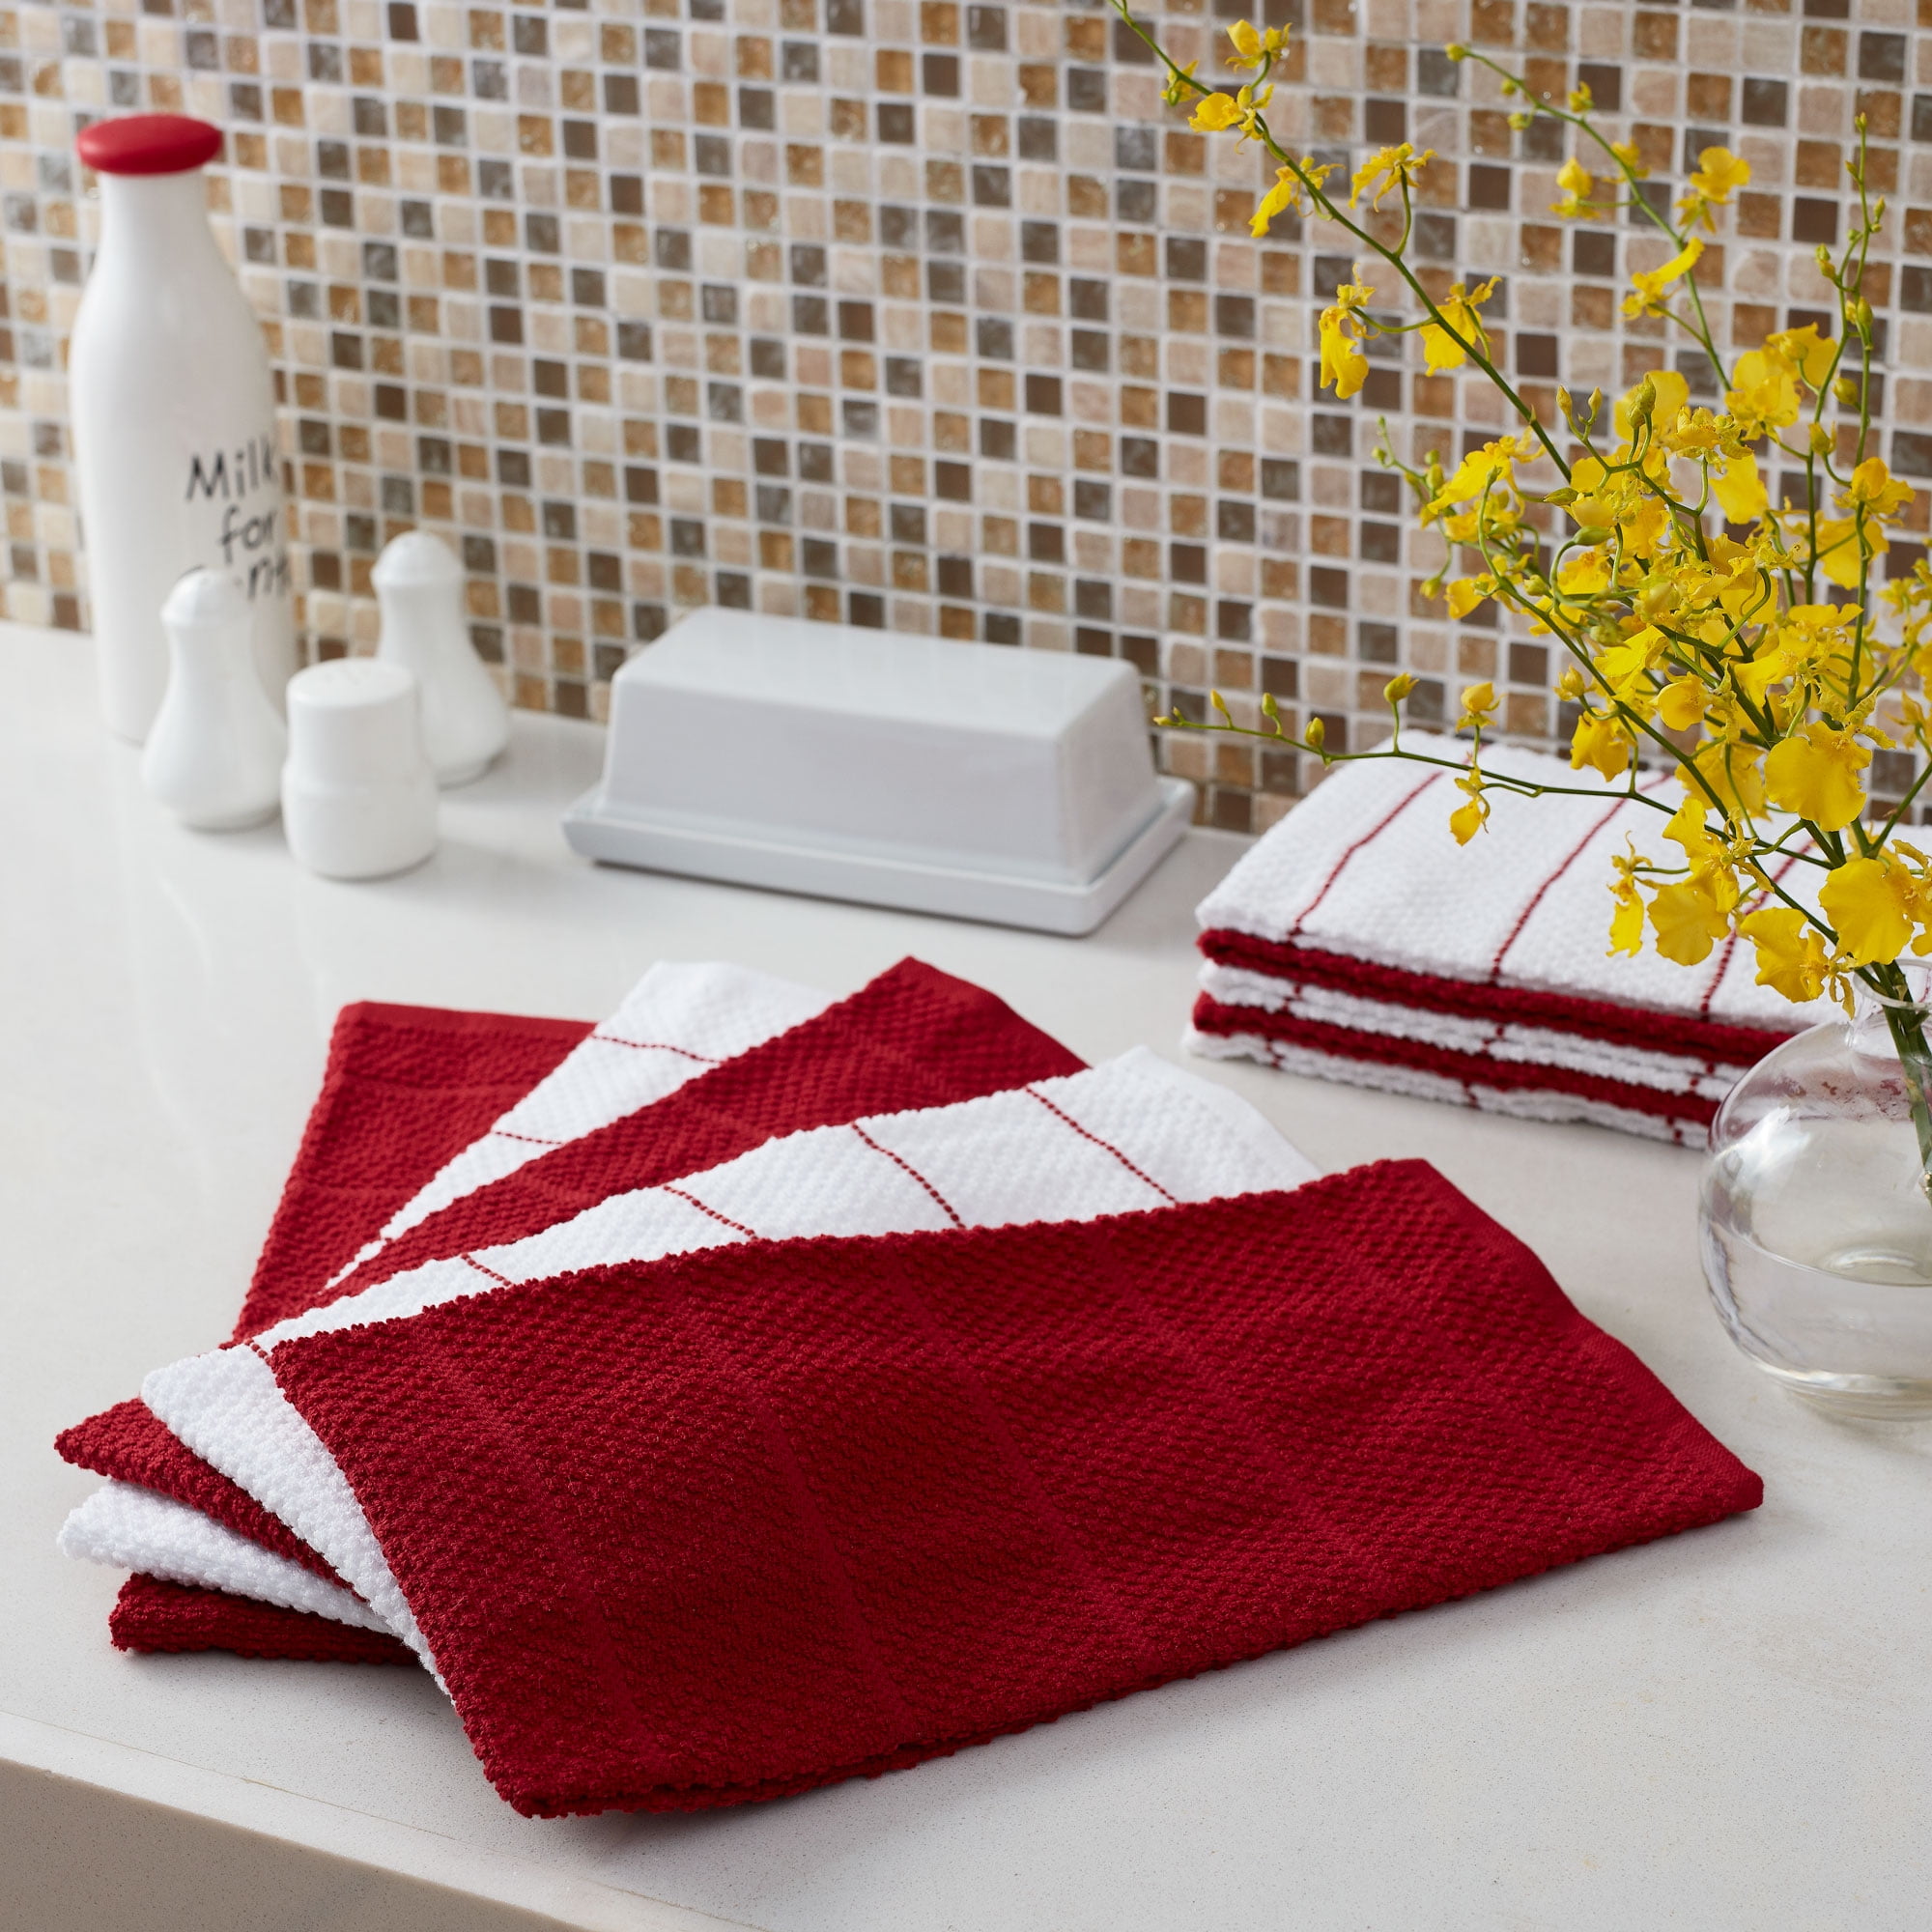 72 Pieces Towel Microfiber 15x25 Inch Beige - Kitchen Towels - at 